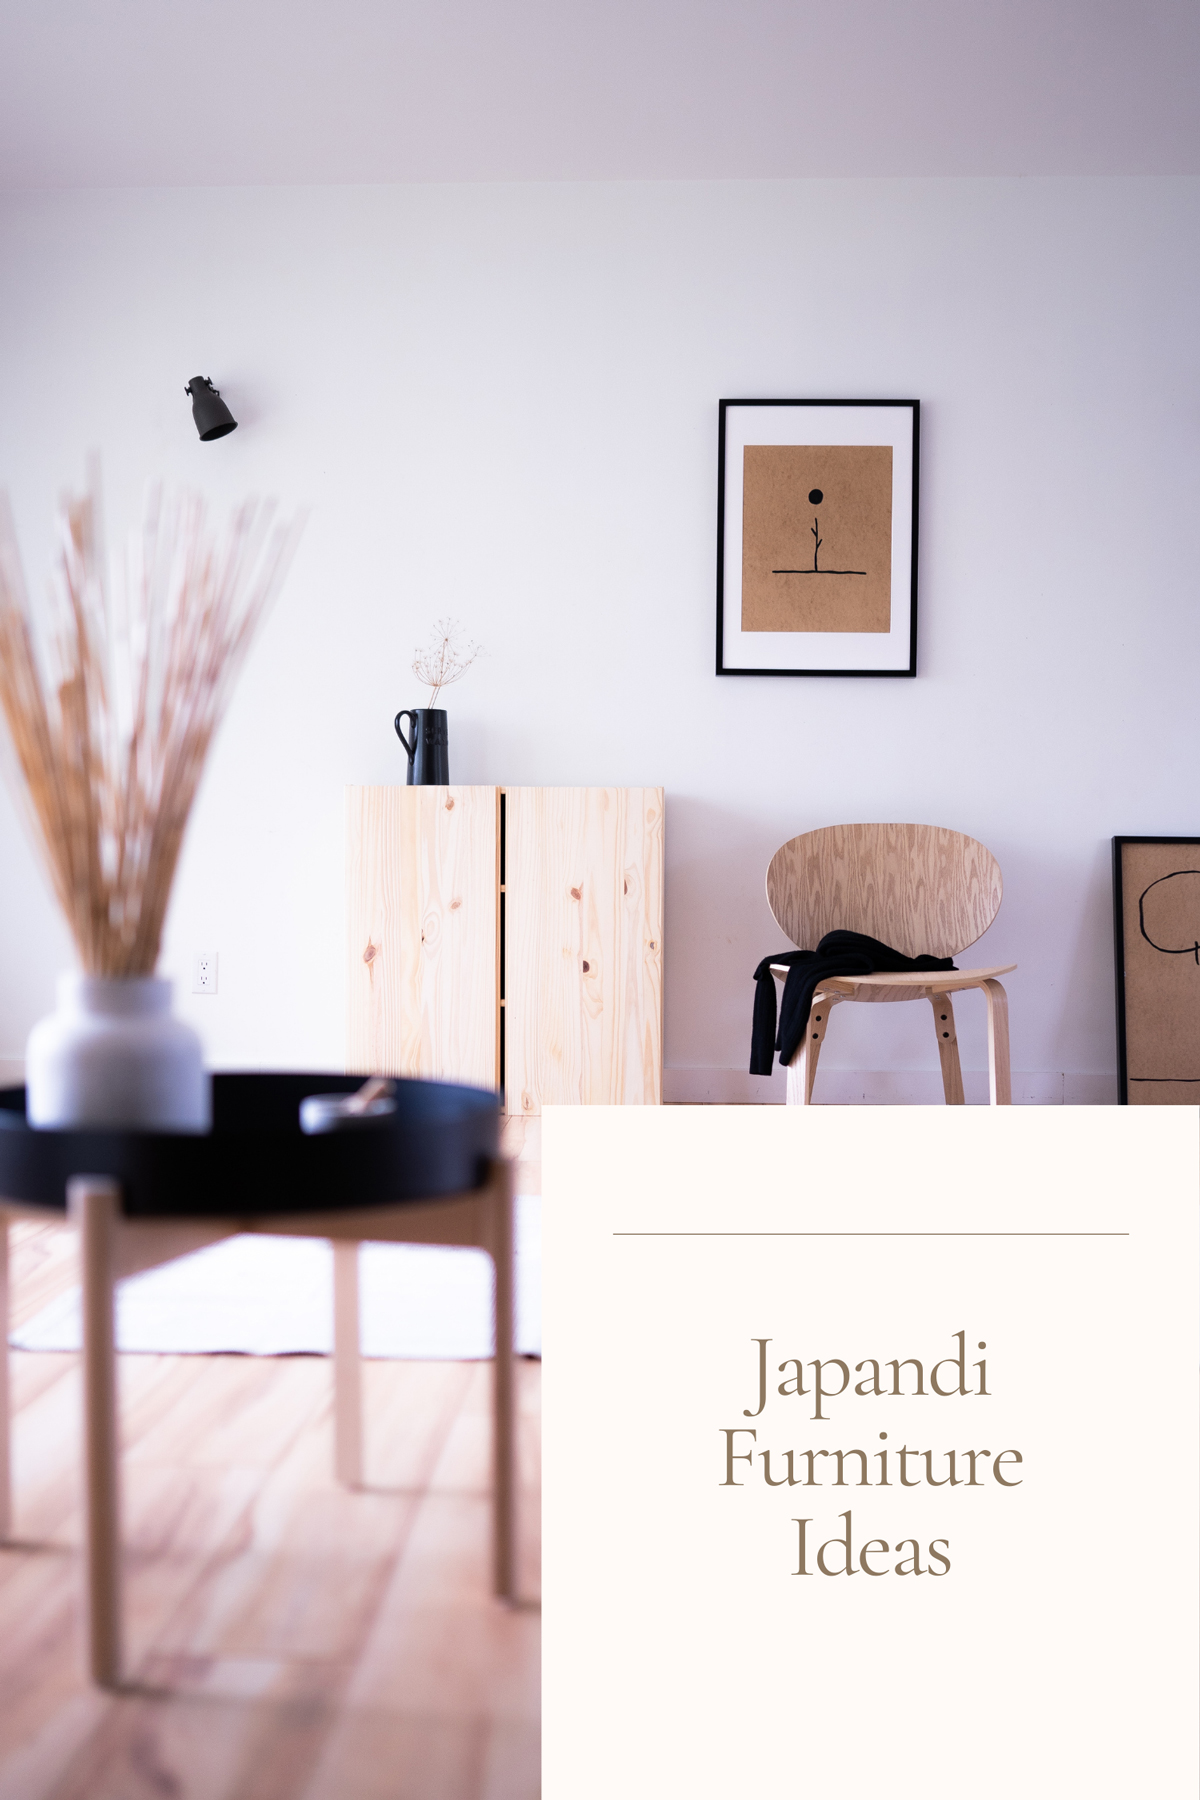 Japandi furniture ideas